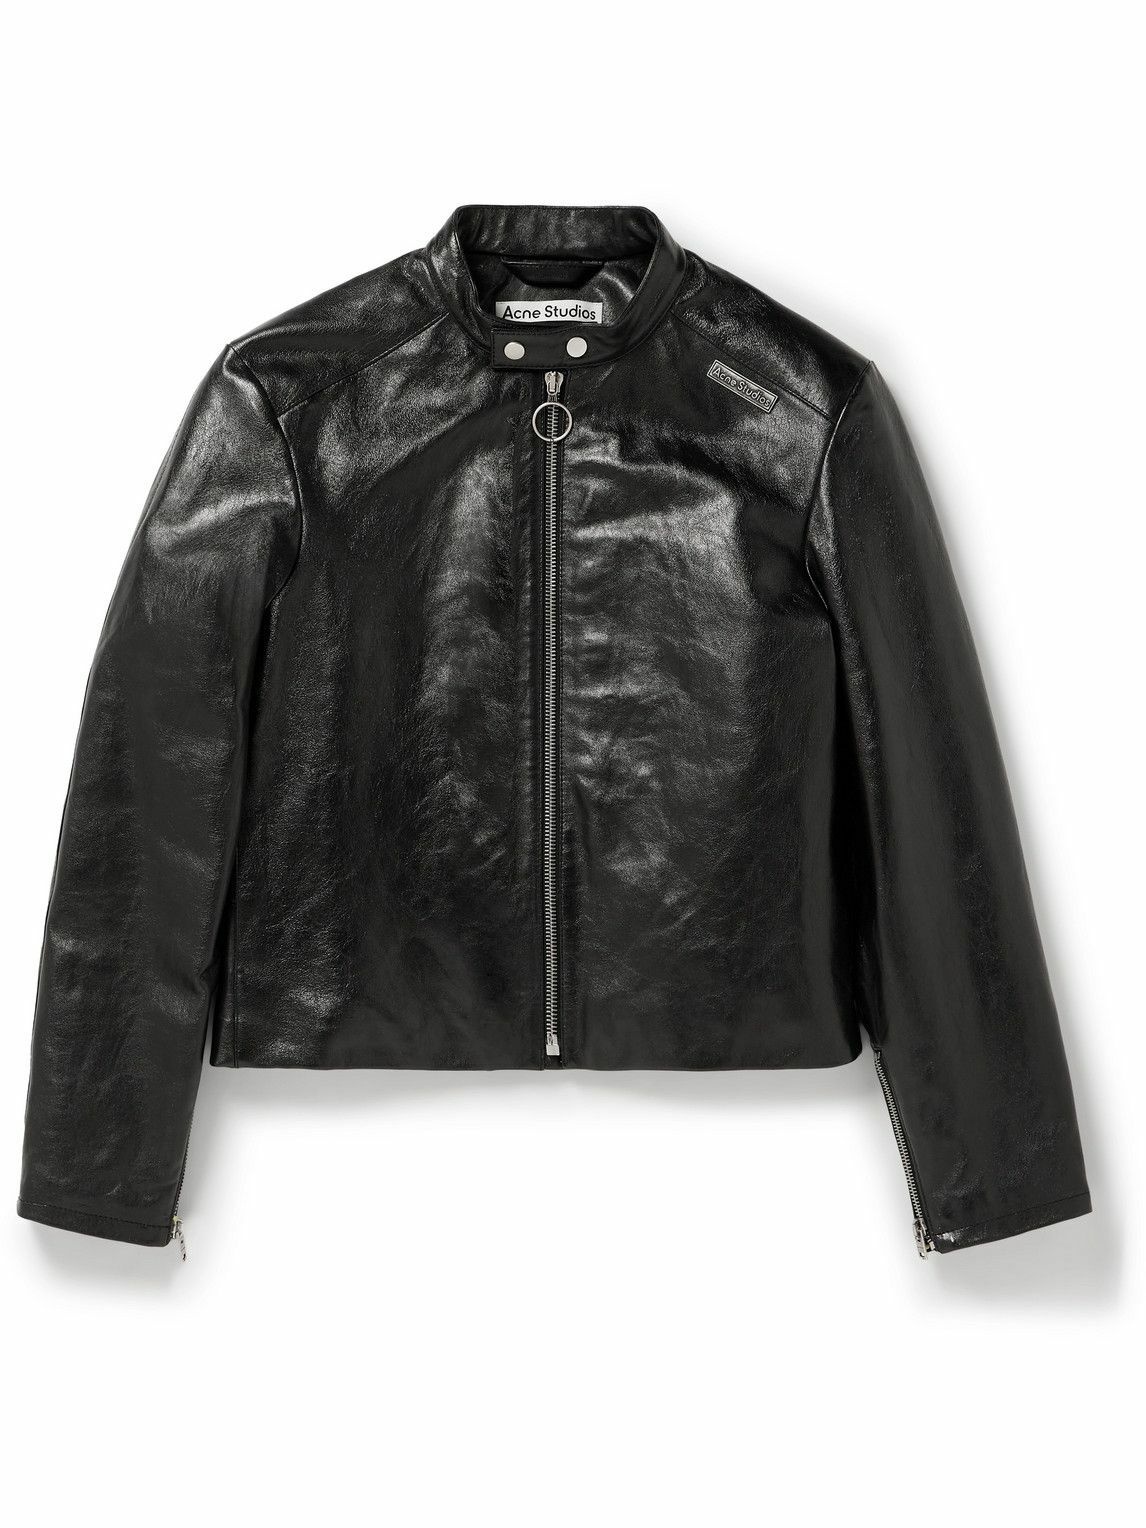 Acne Studios Black Leather Chore Jacket Acne Studios